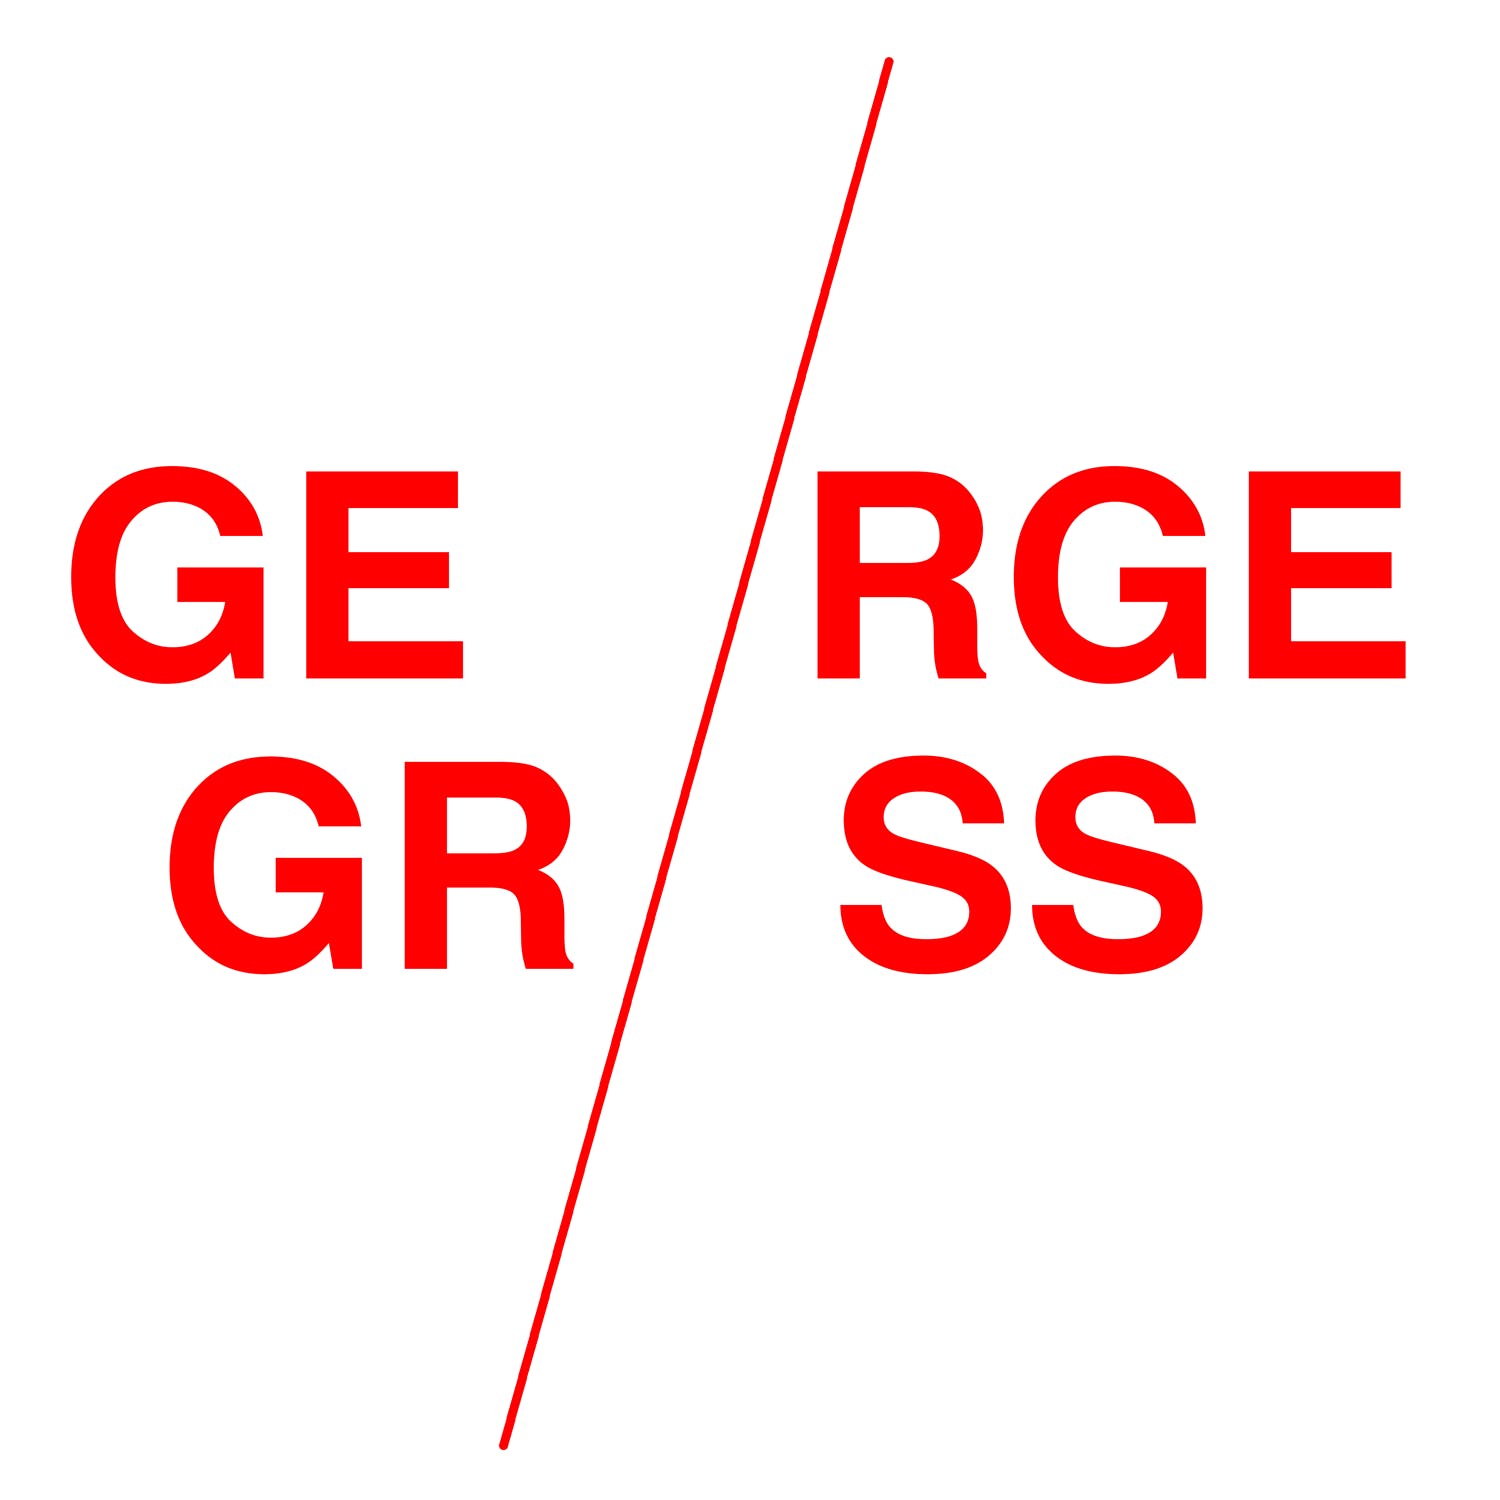 George Gross media 1